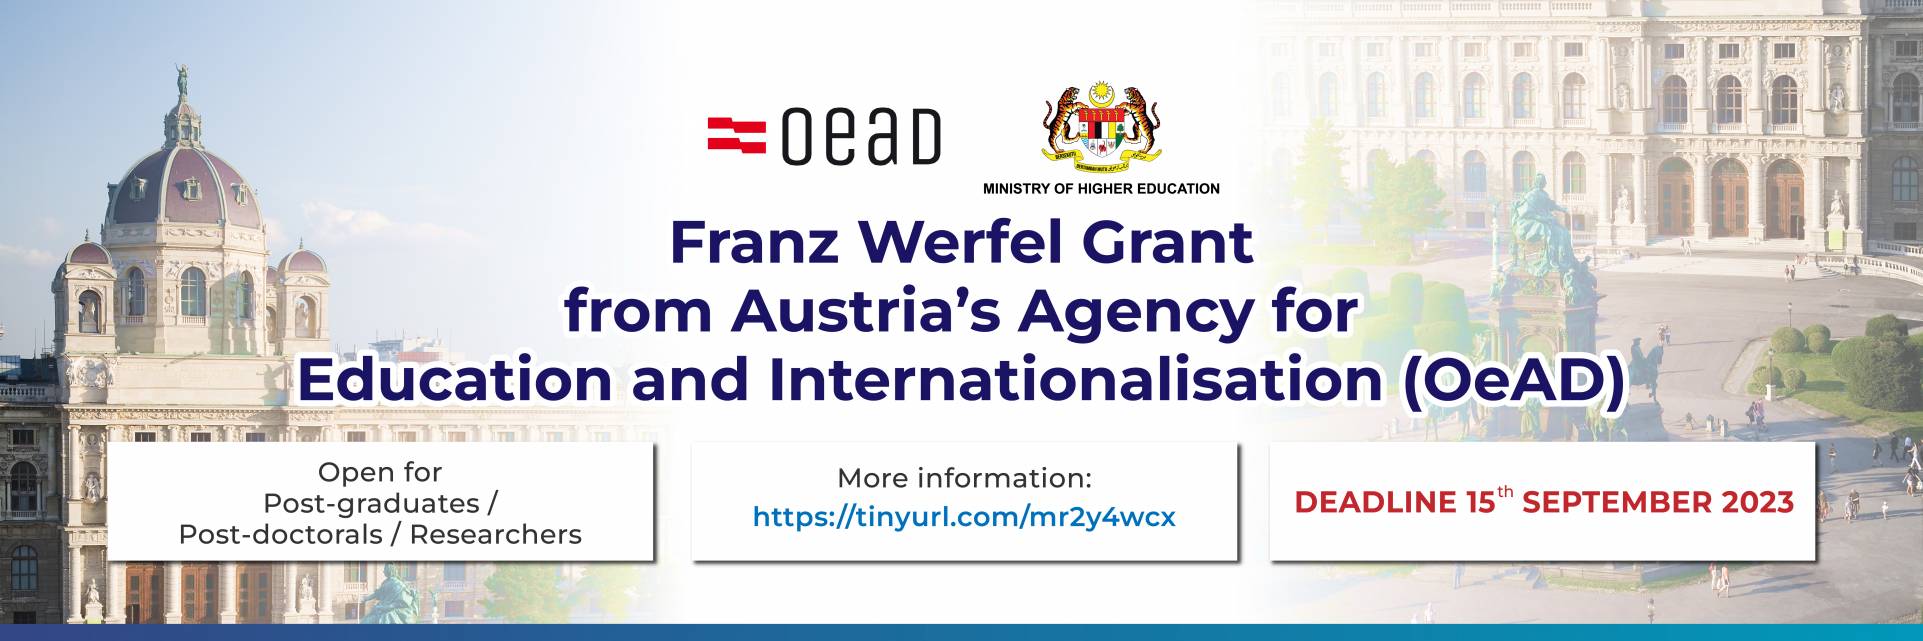 Pelawaan Tawaran Franz Werfel Grant Daripada Austria’s Agency For Education And Internationalisation (OEAD)